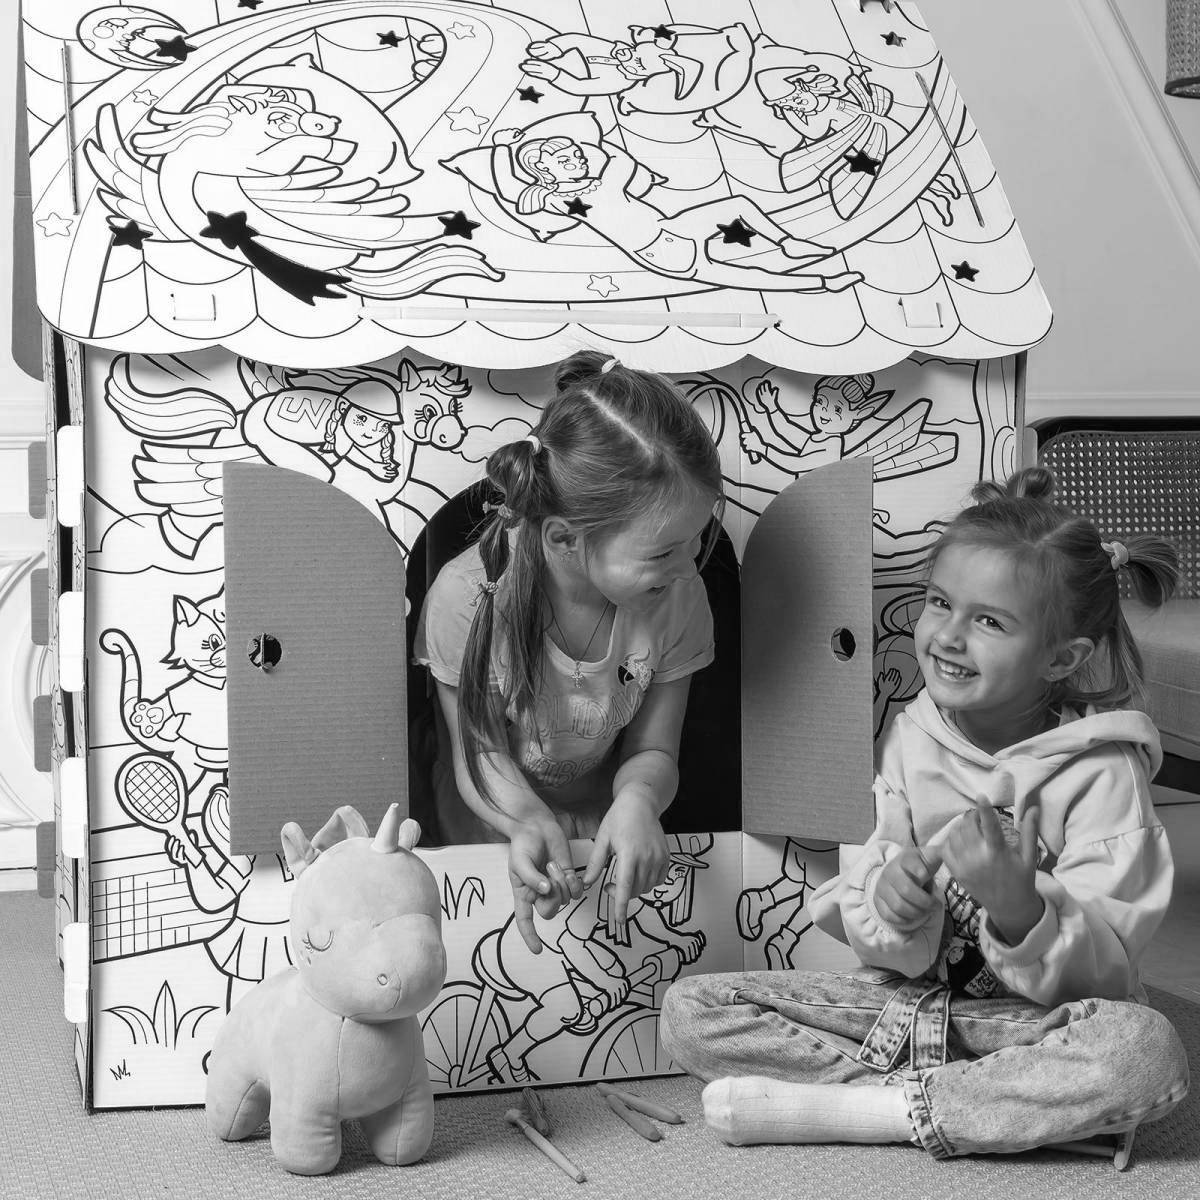 Cardboard house children's universe #6